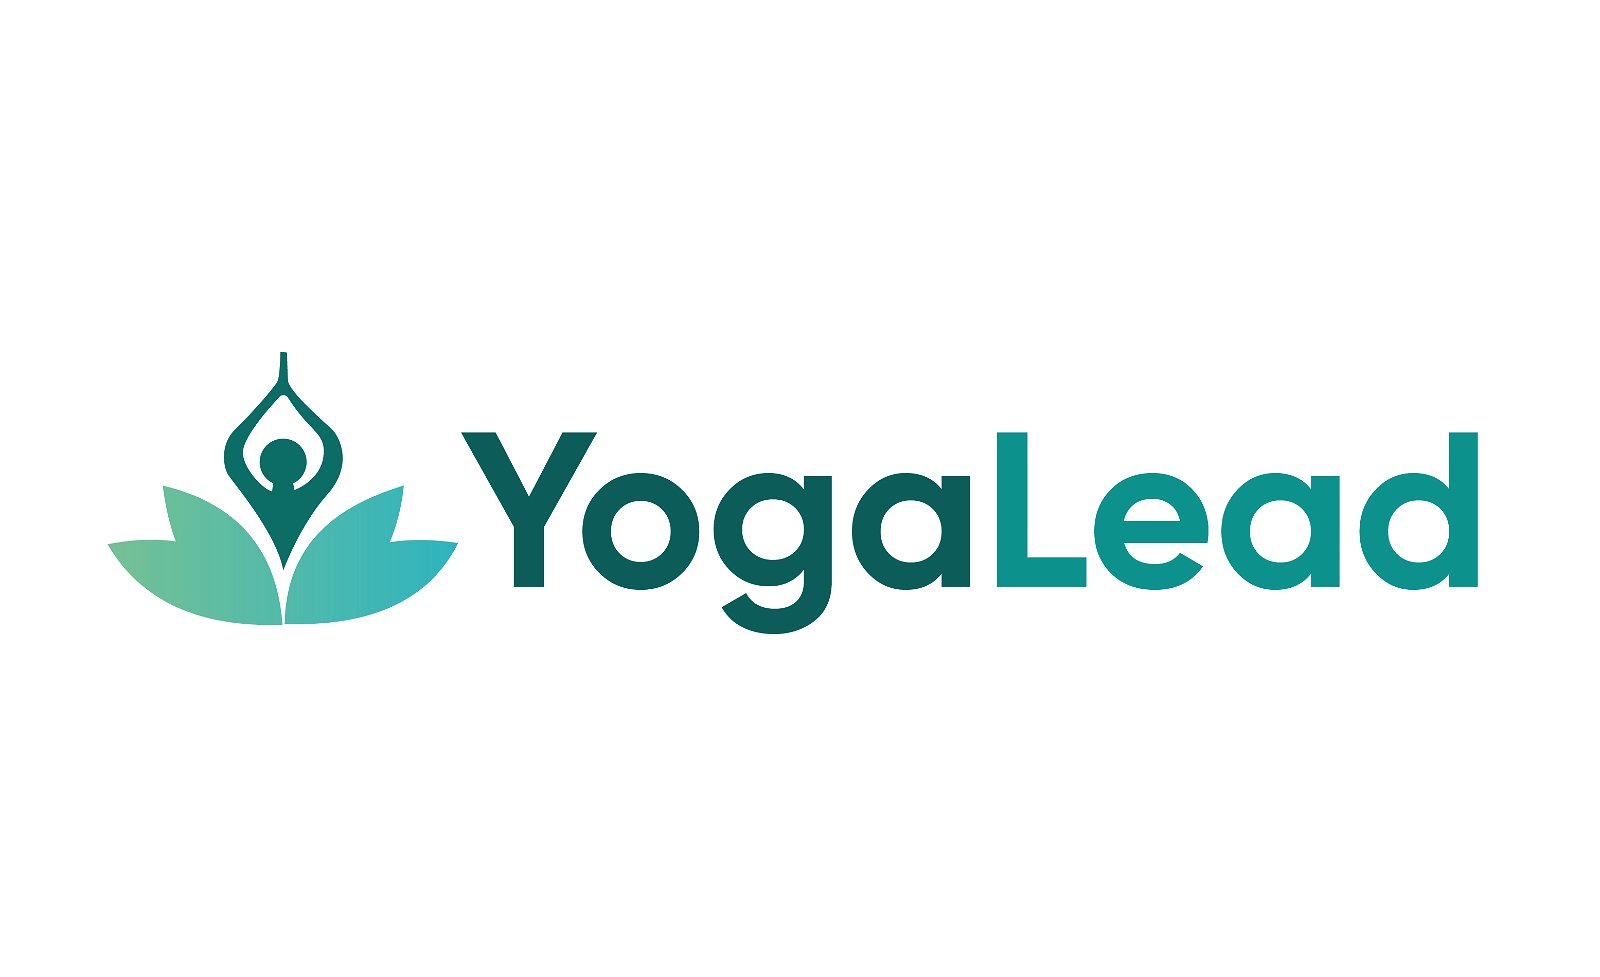 YogaLead.com - Creative brandable domain for sale